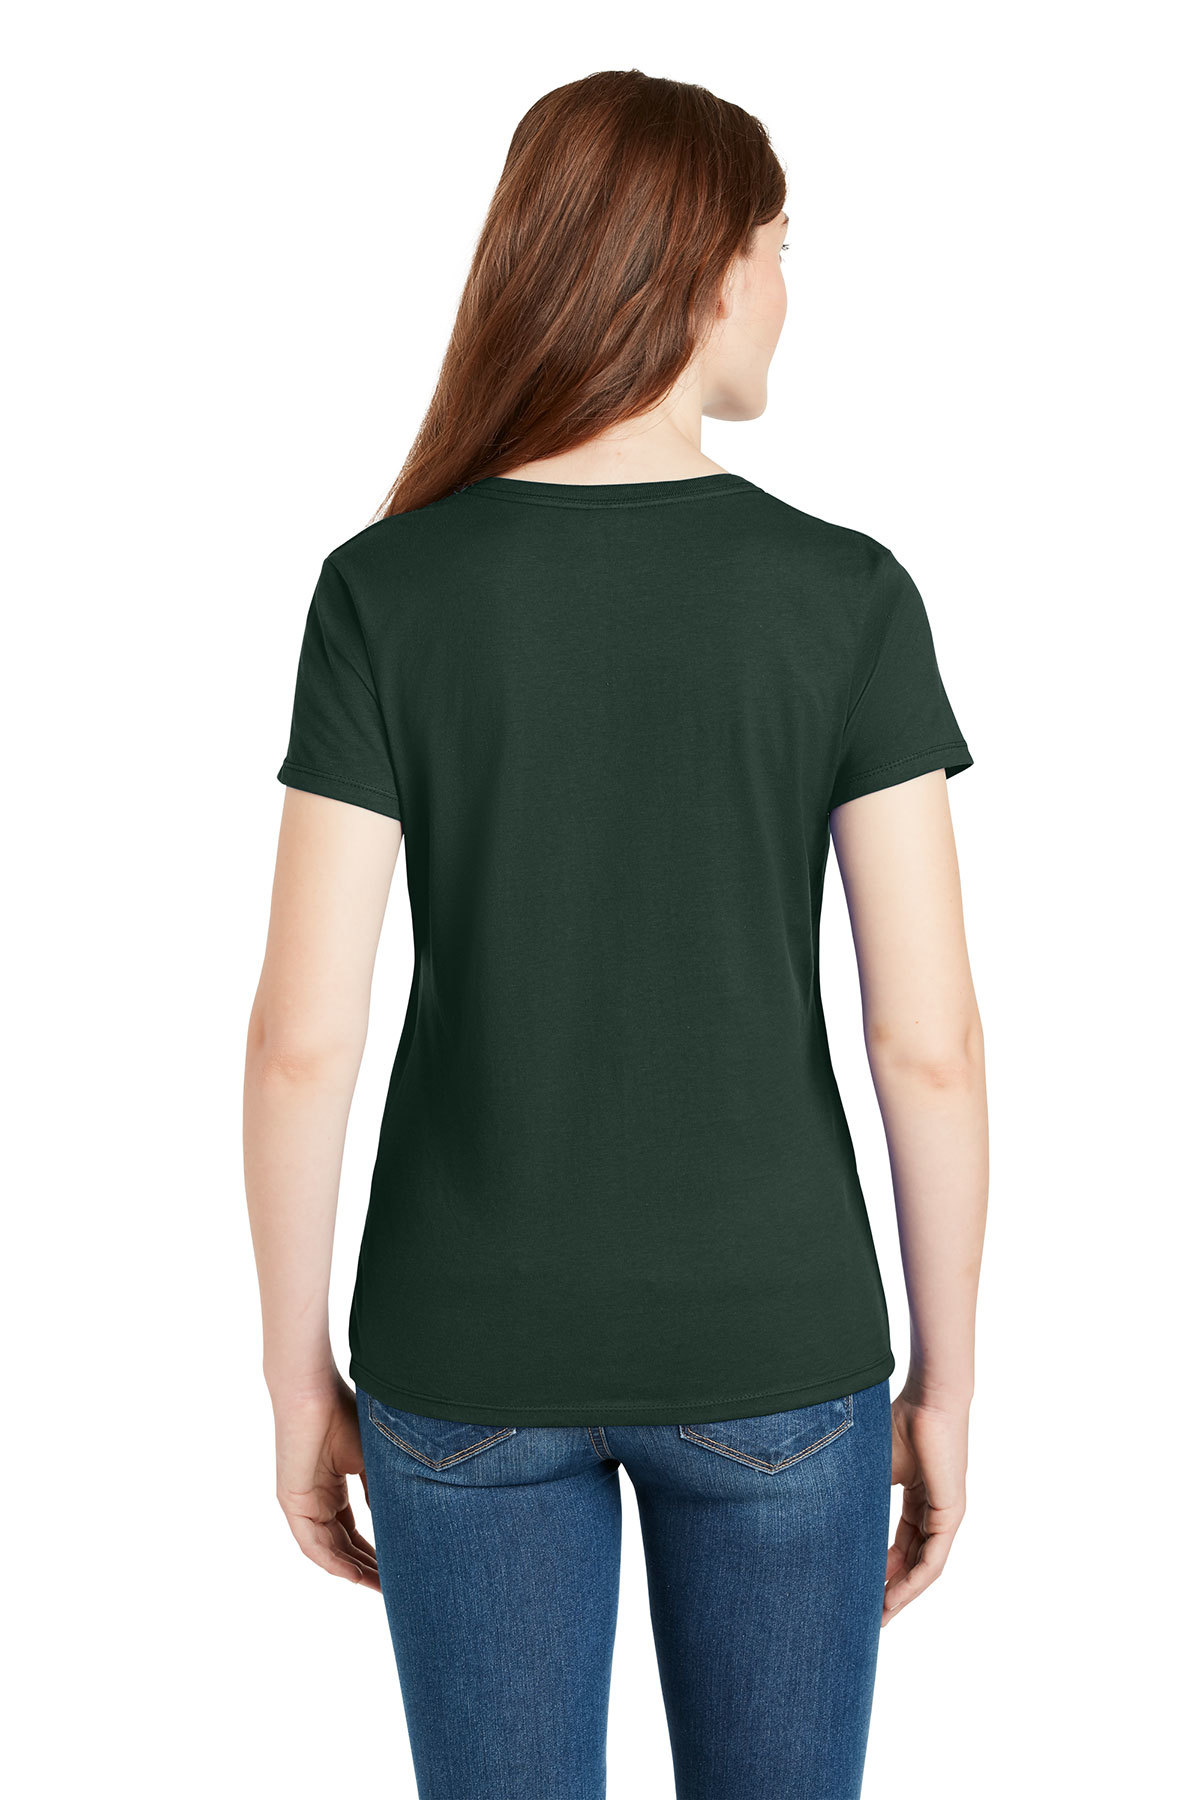 Hanes Ladies Perfect-T Cotton V-Neck T-Shirt | Product | SanMar